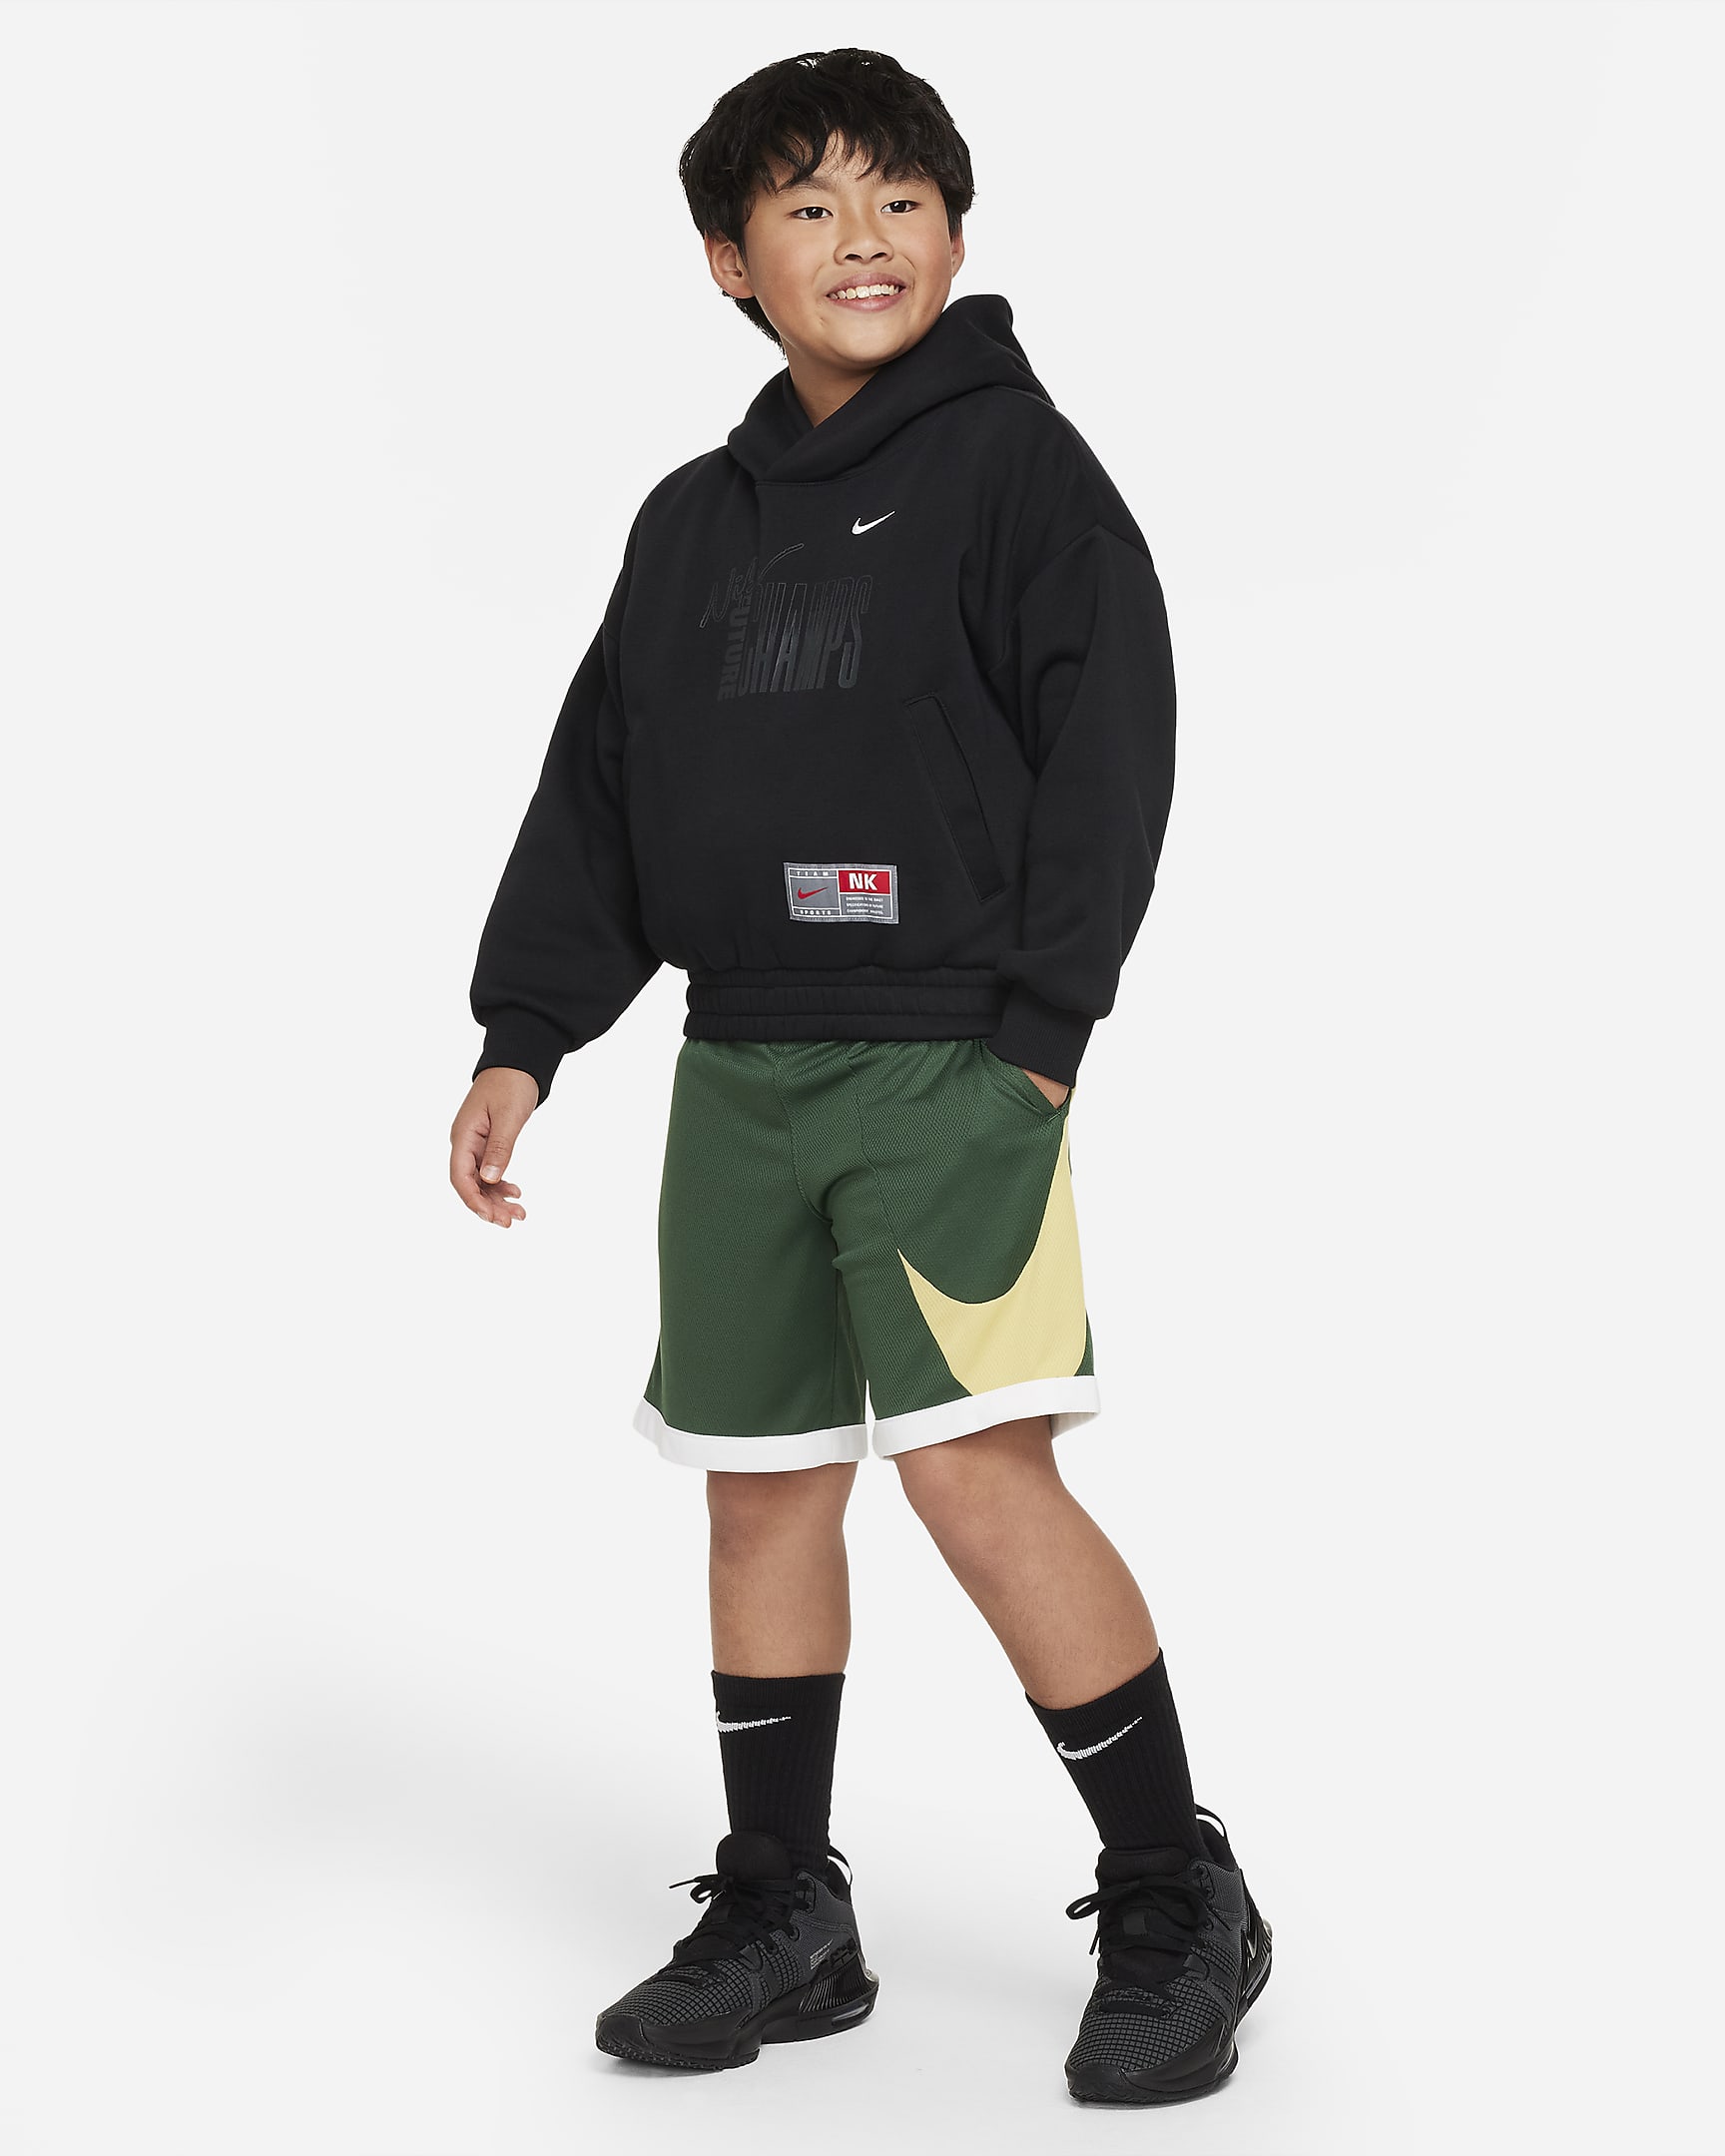 Nike Dri-FIT Older Kids' (Boys') Basketball Shorts - Fir/White/White/Saturn Gold